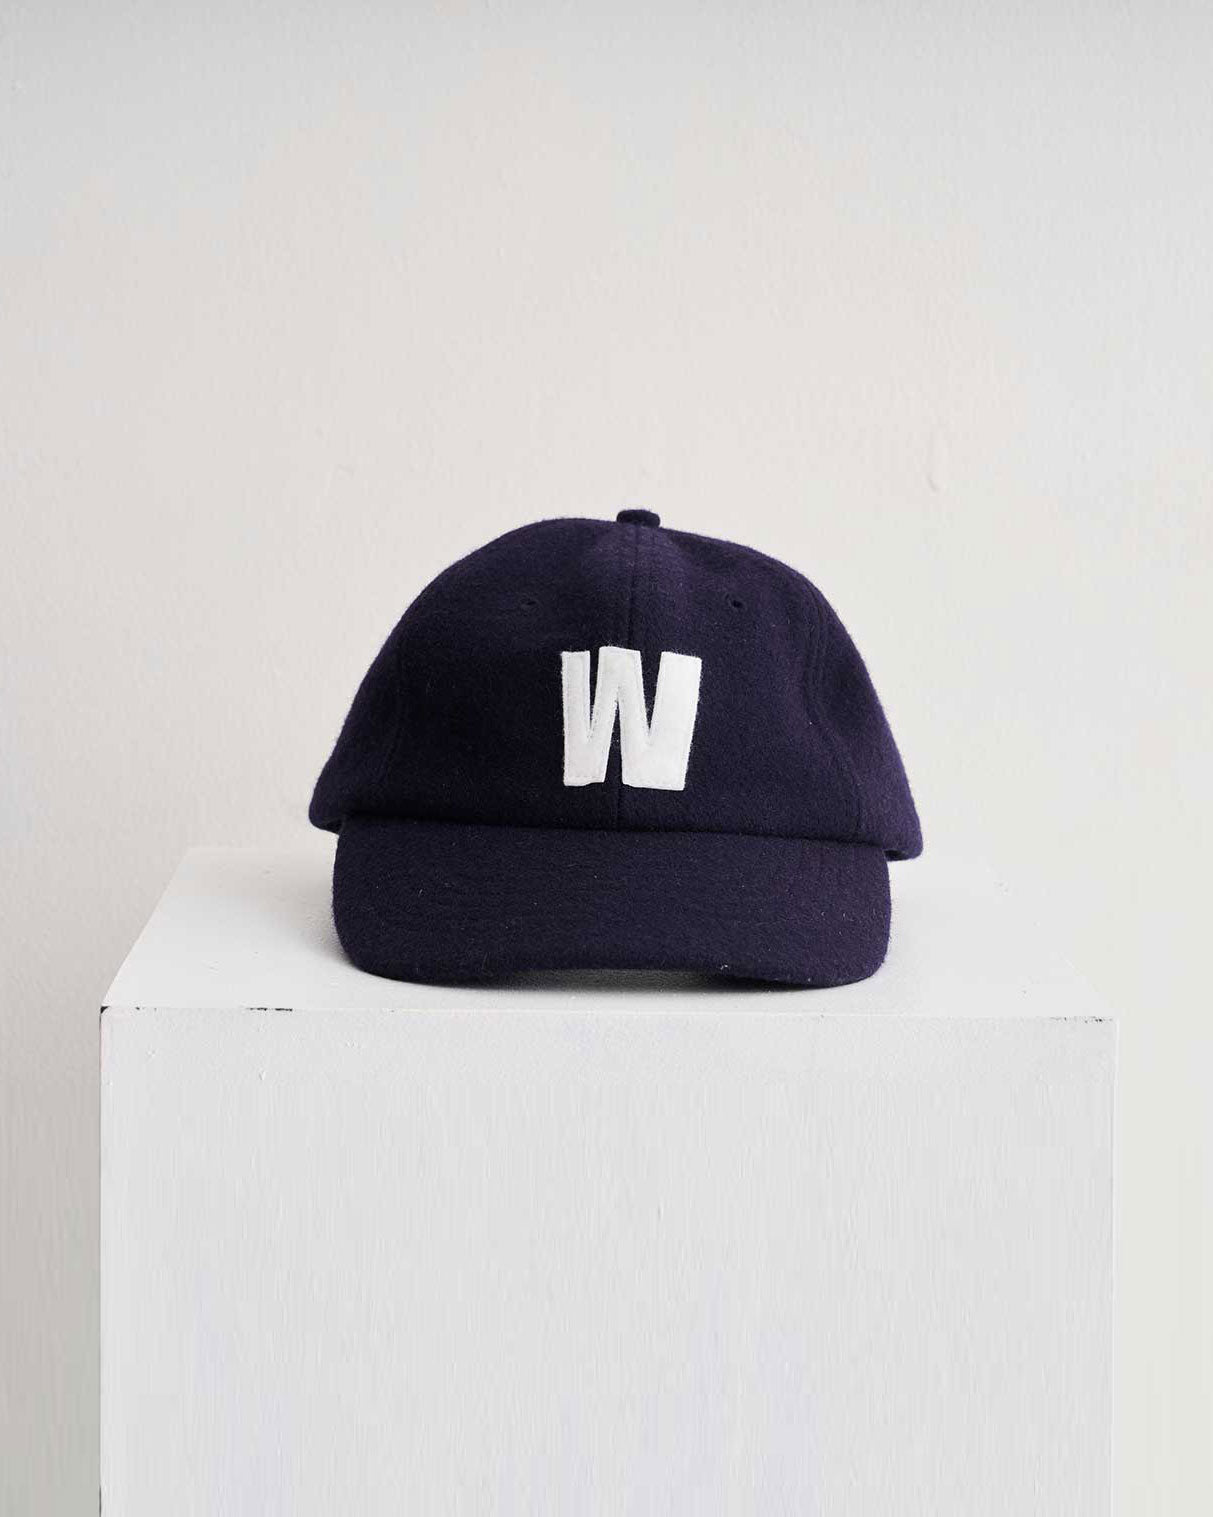 W Hat